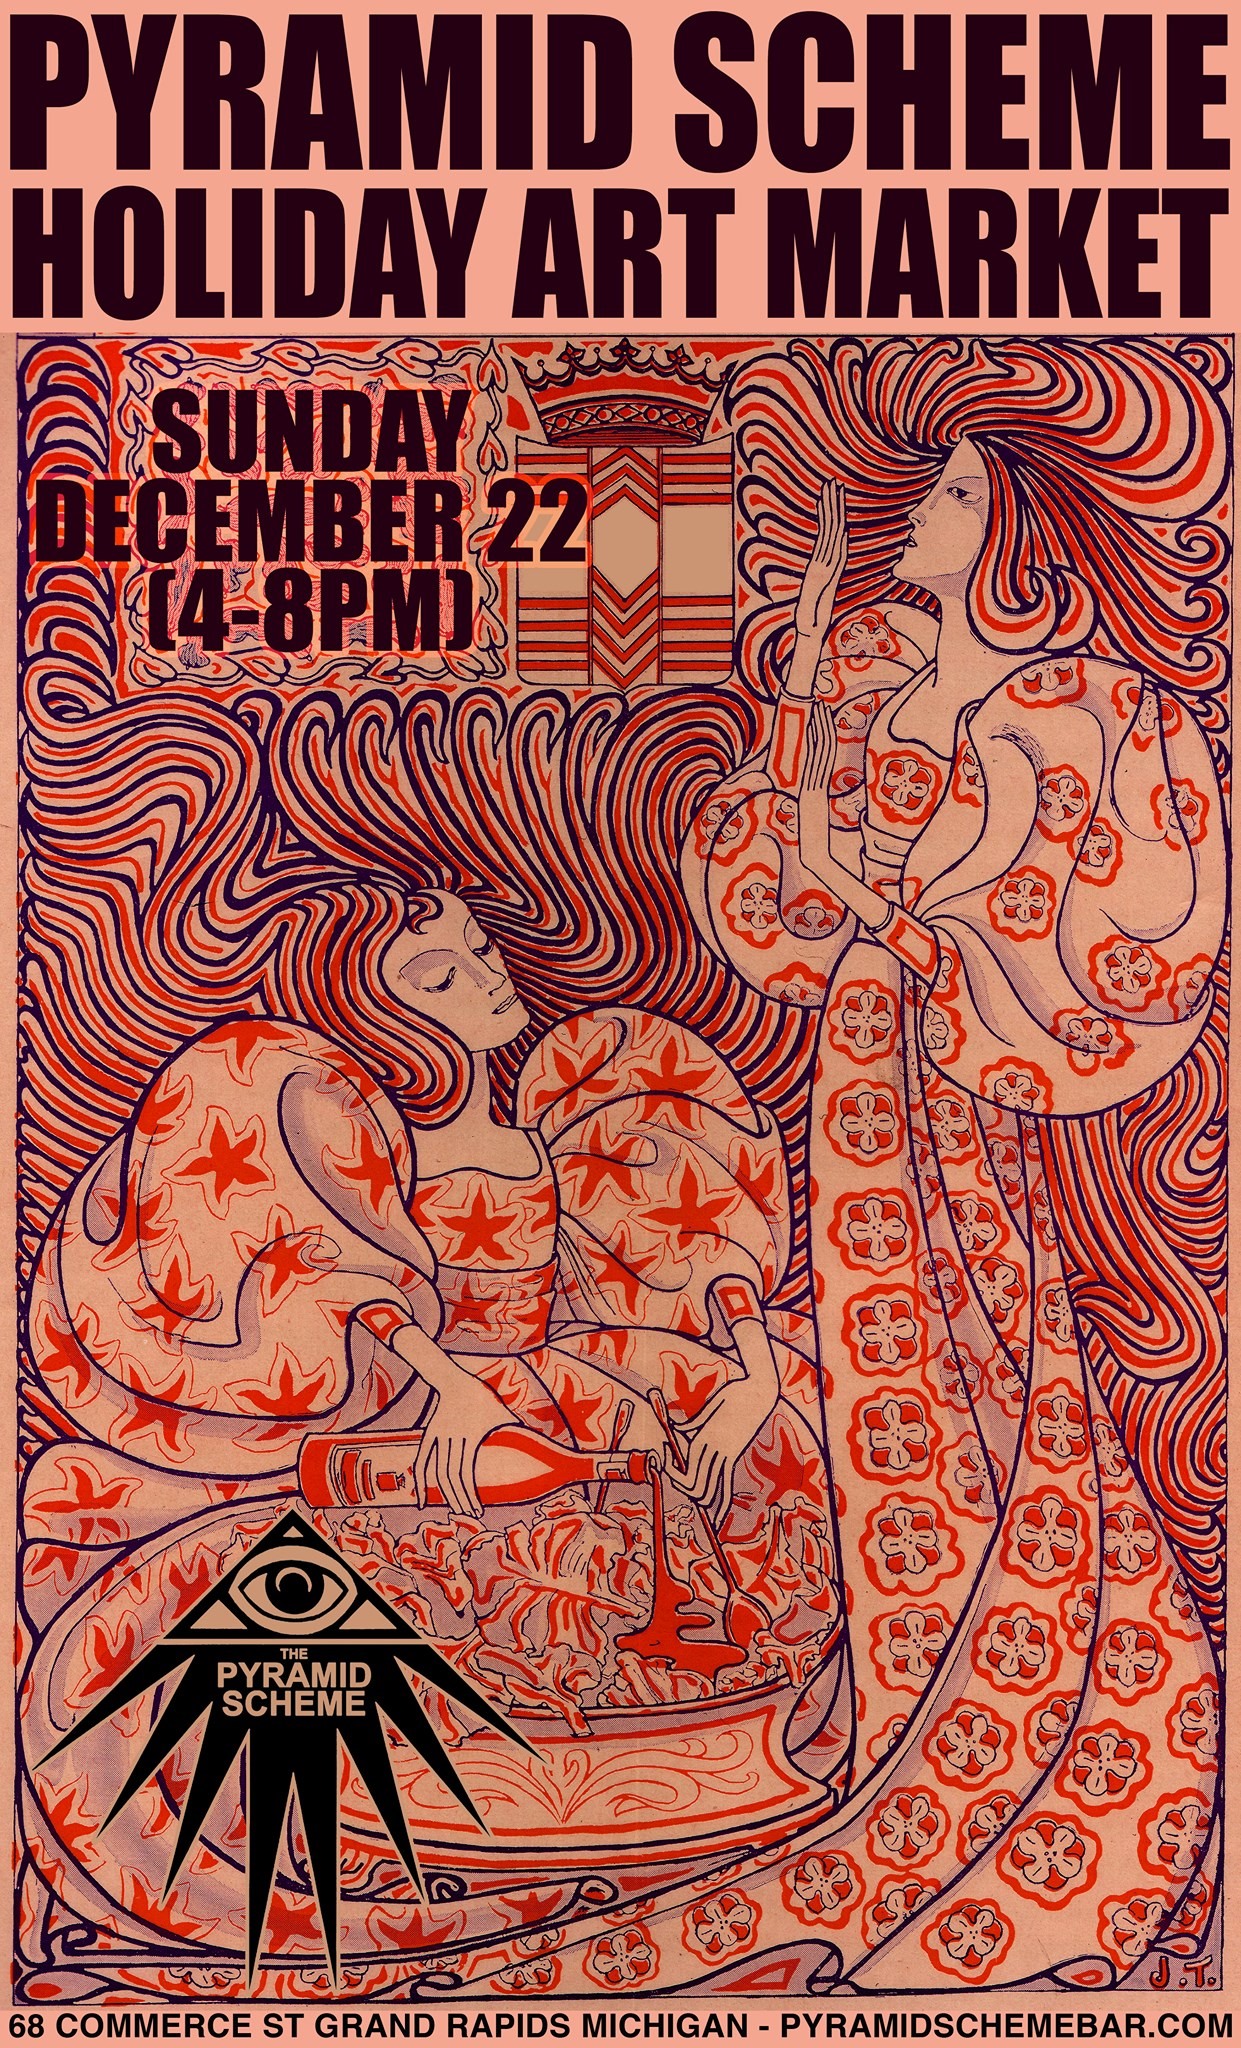 Pyramid Scheme Holiday Art Market Sunday December 22 (4-8PM)